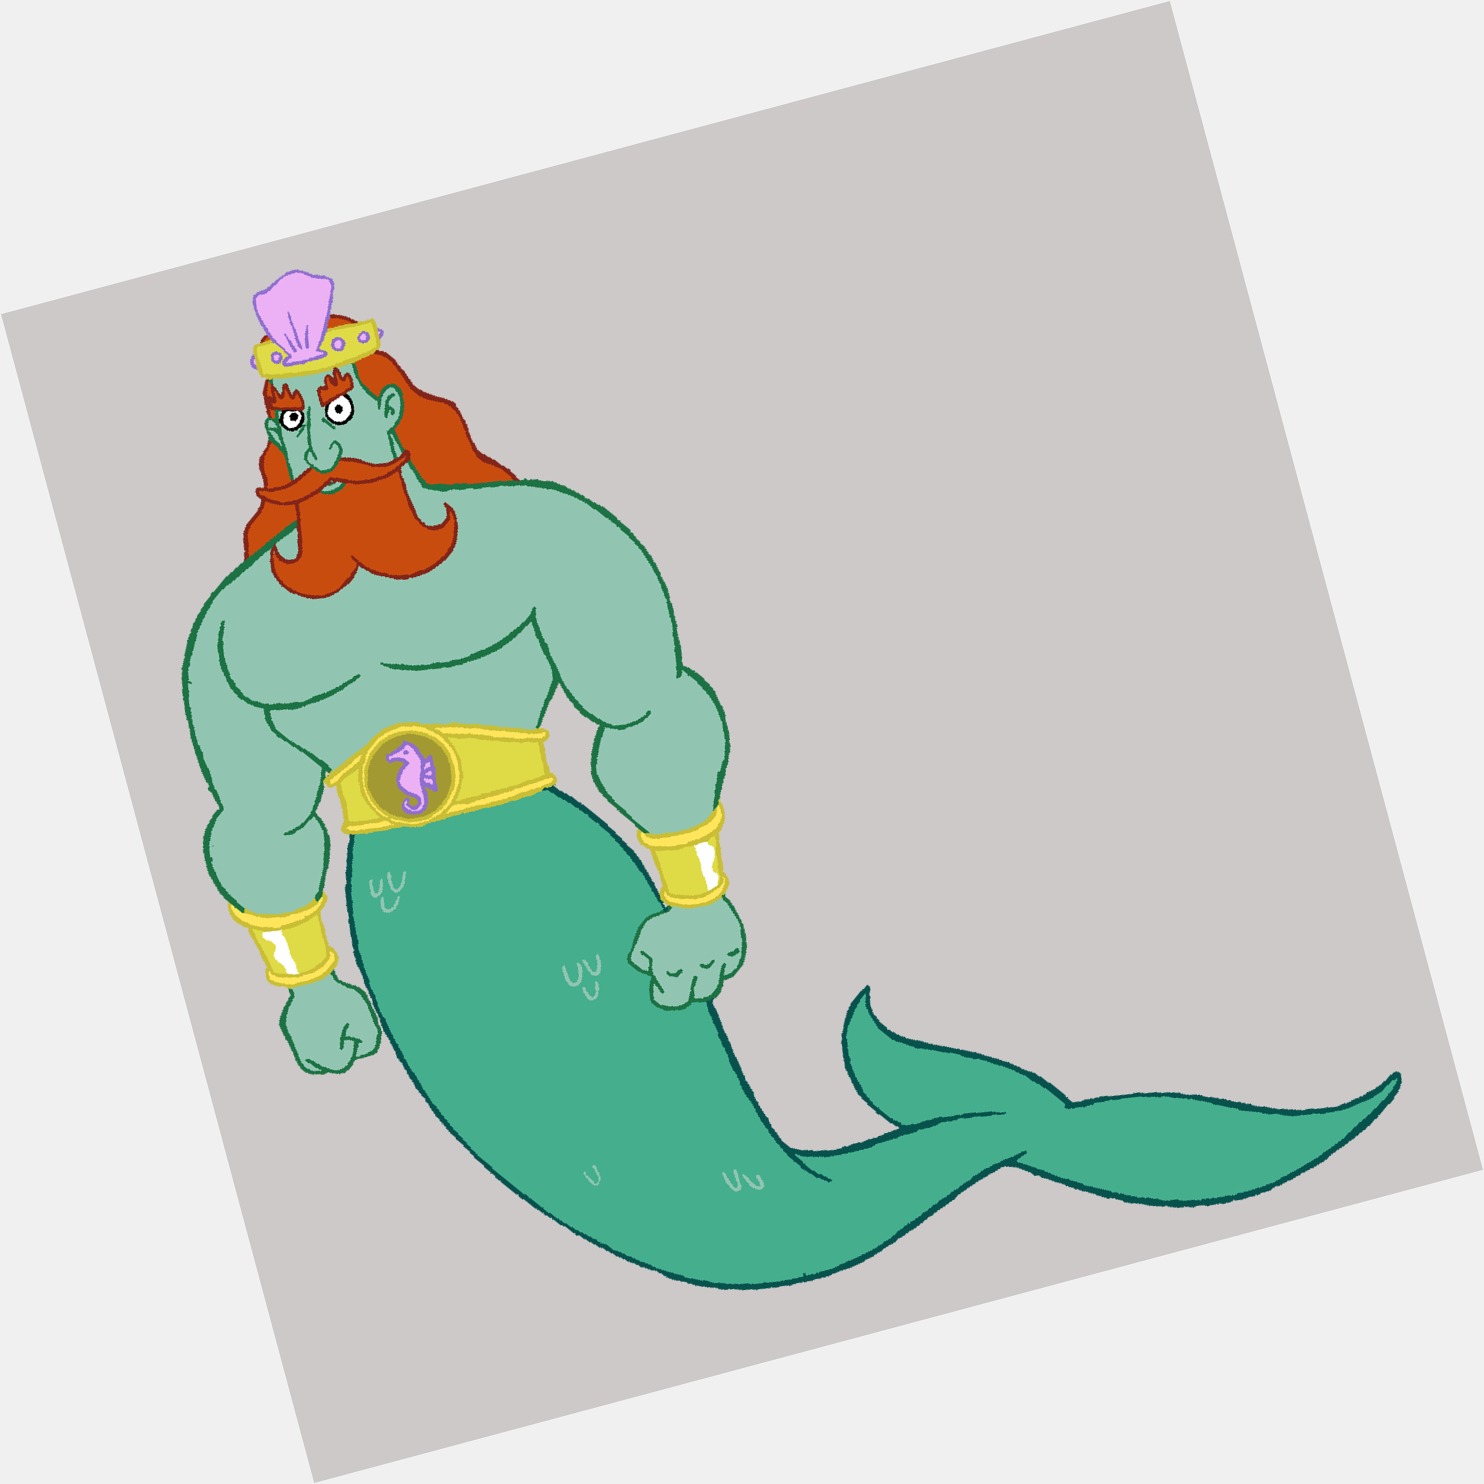 King Neptune shirtless bikini